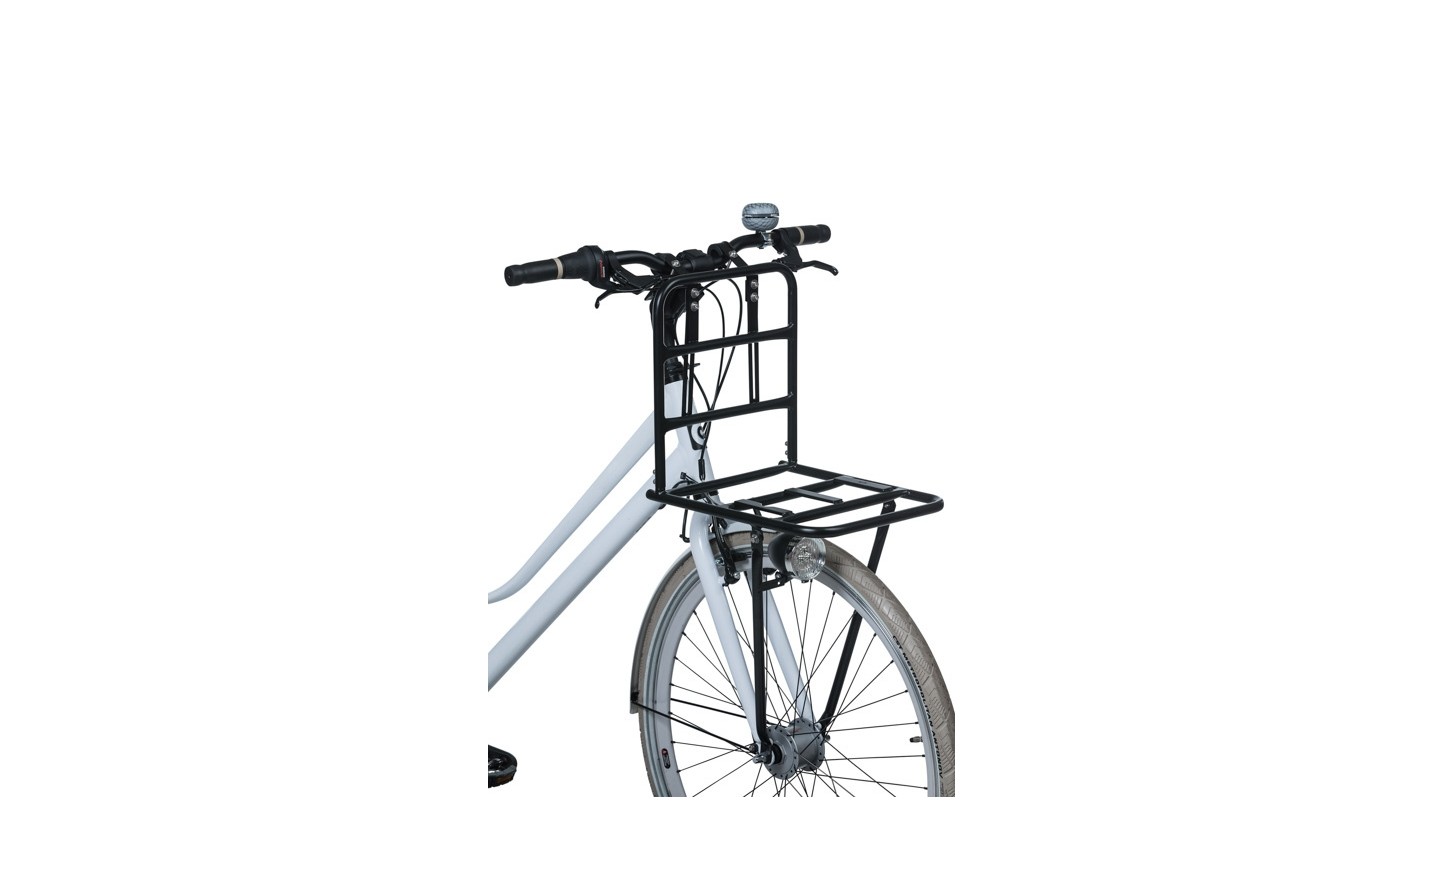 Soporte bicicleta regulable con fijación a las vainas traseras